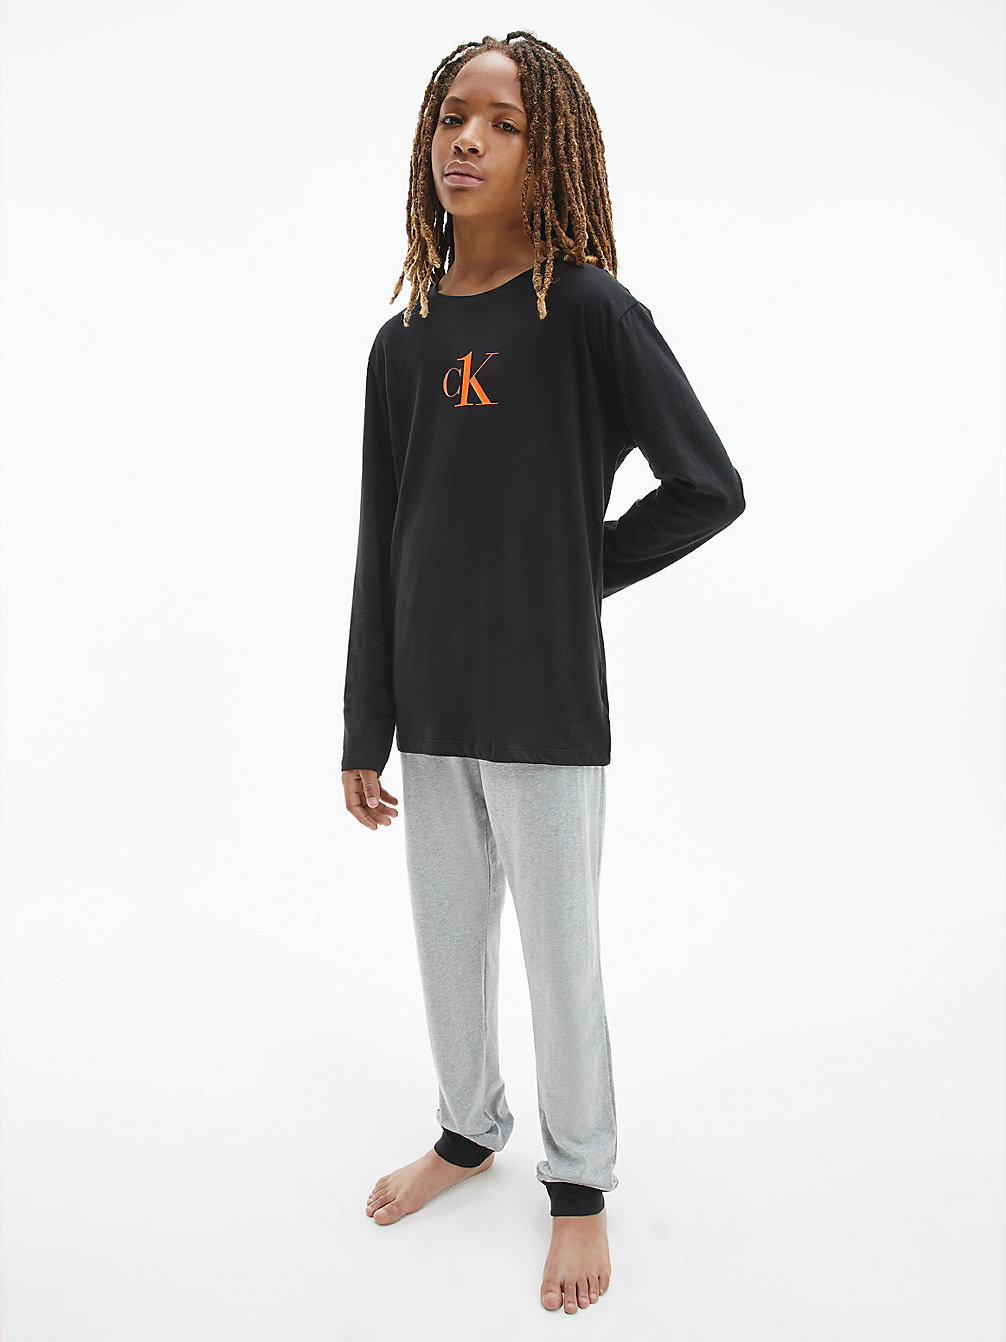 PVHBLACK/W/GREYHEATHER Organic Cotton Pyjama Set - CK One undefined boys Calvin Klein